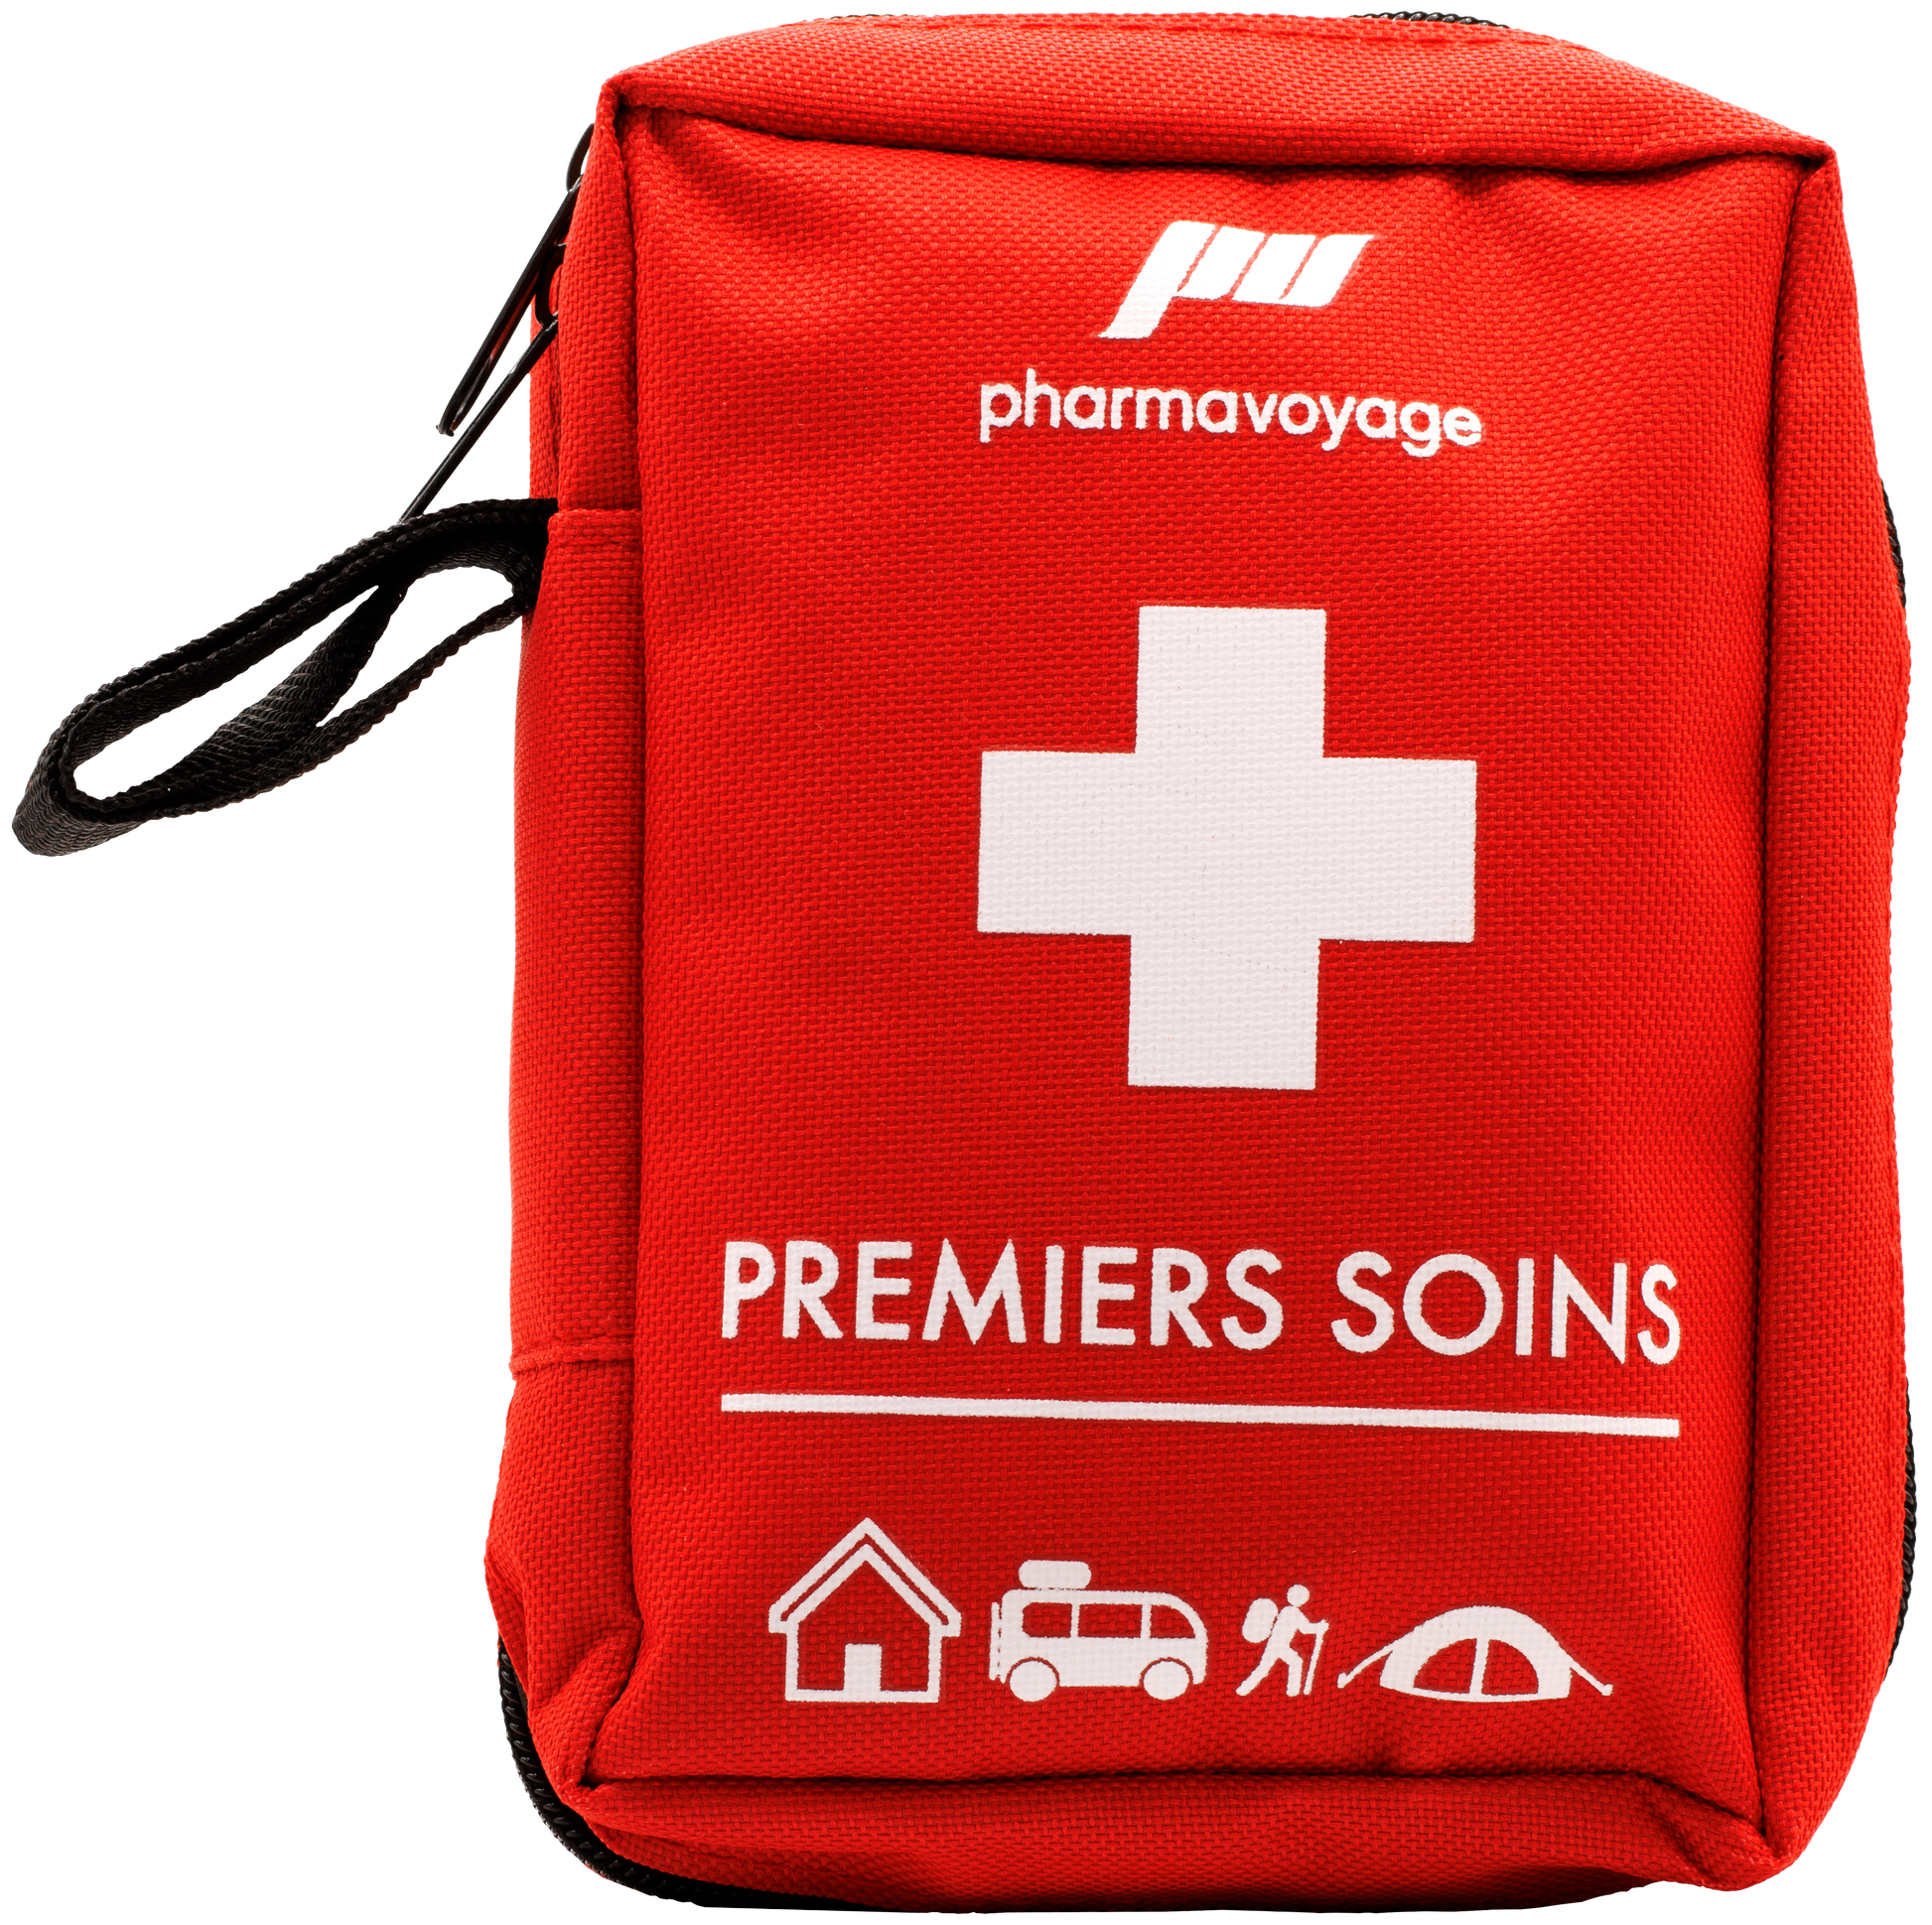 Trousse Premiers Soins Pharmavoyage